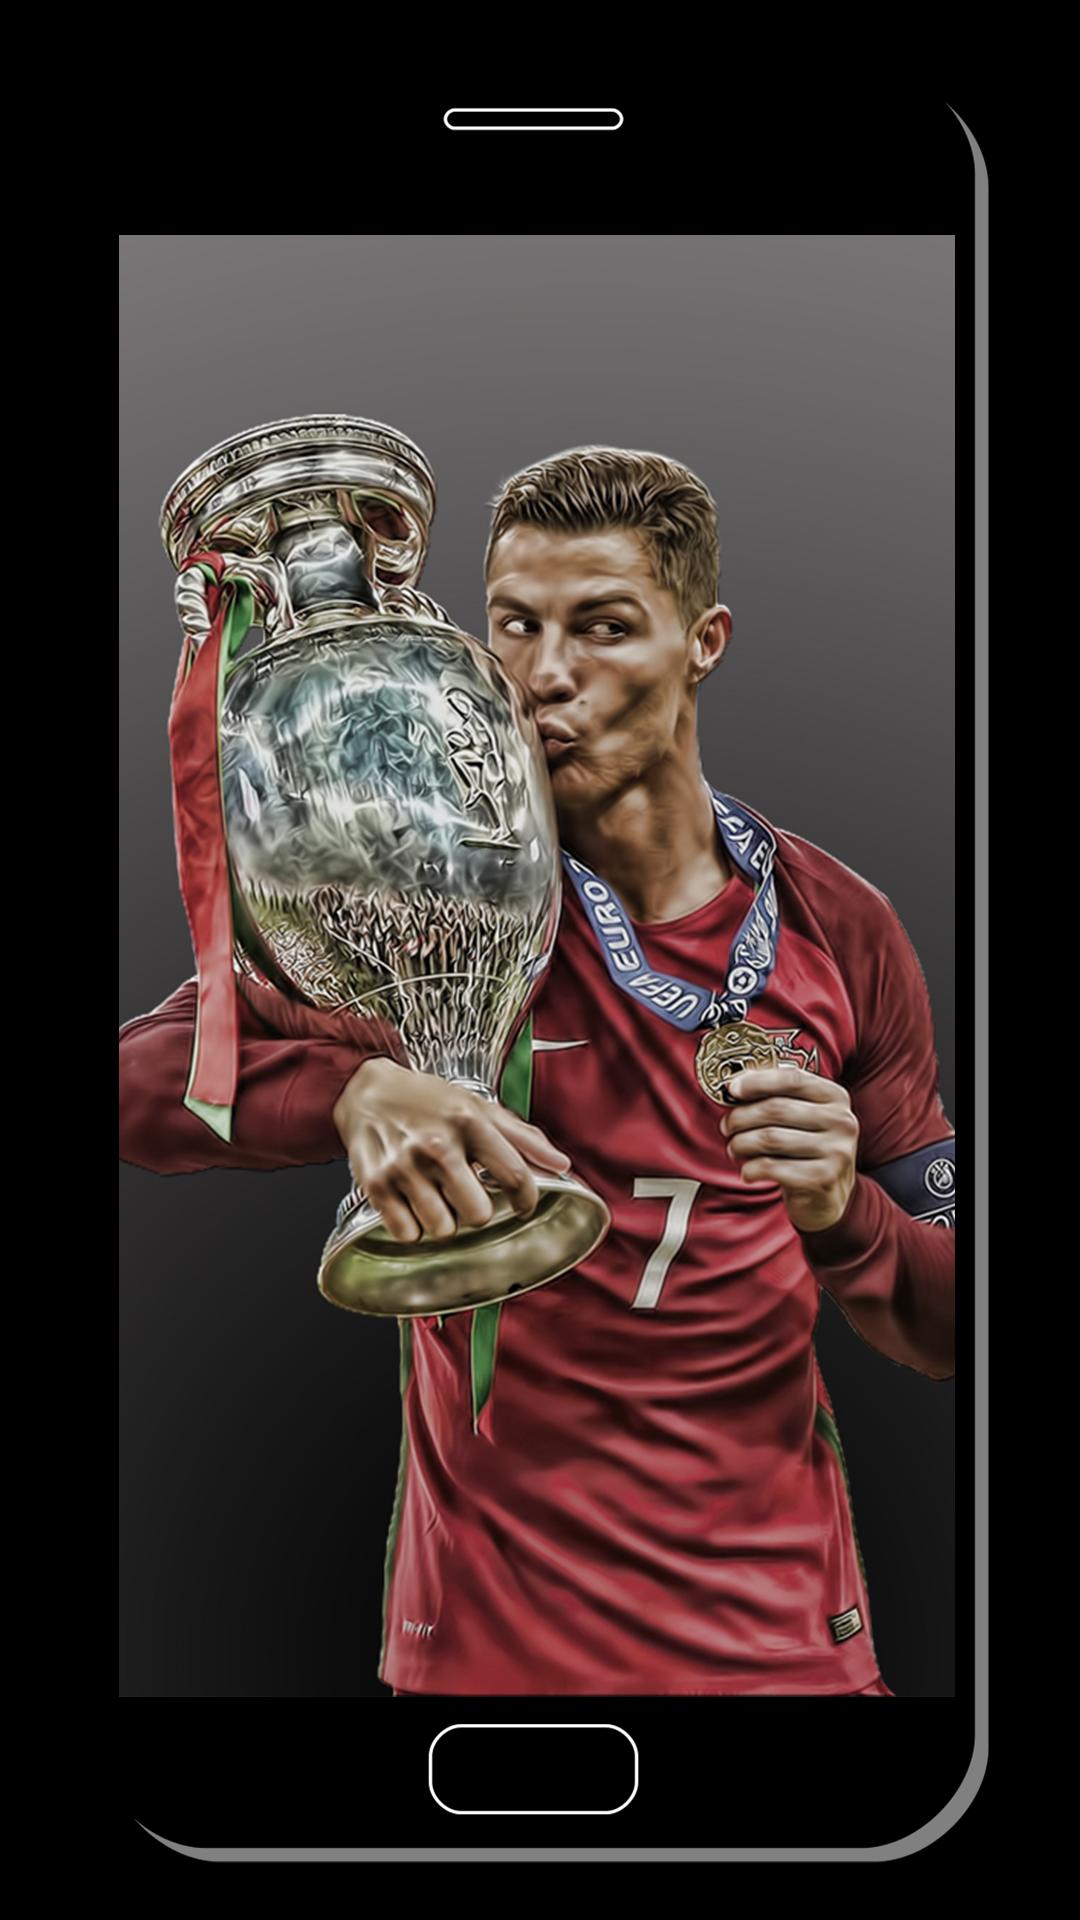 Cristiano Ronaldo Live Wallpaper for Android - APK Download